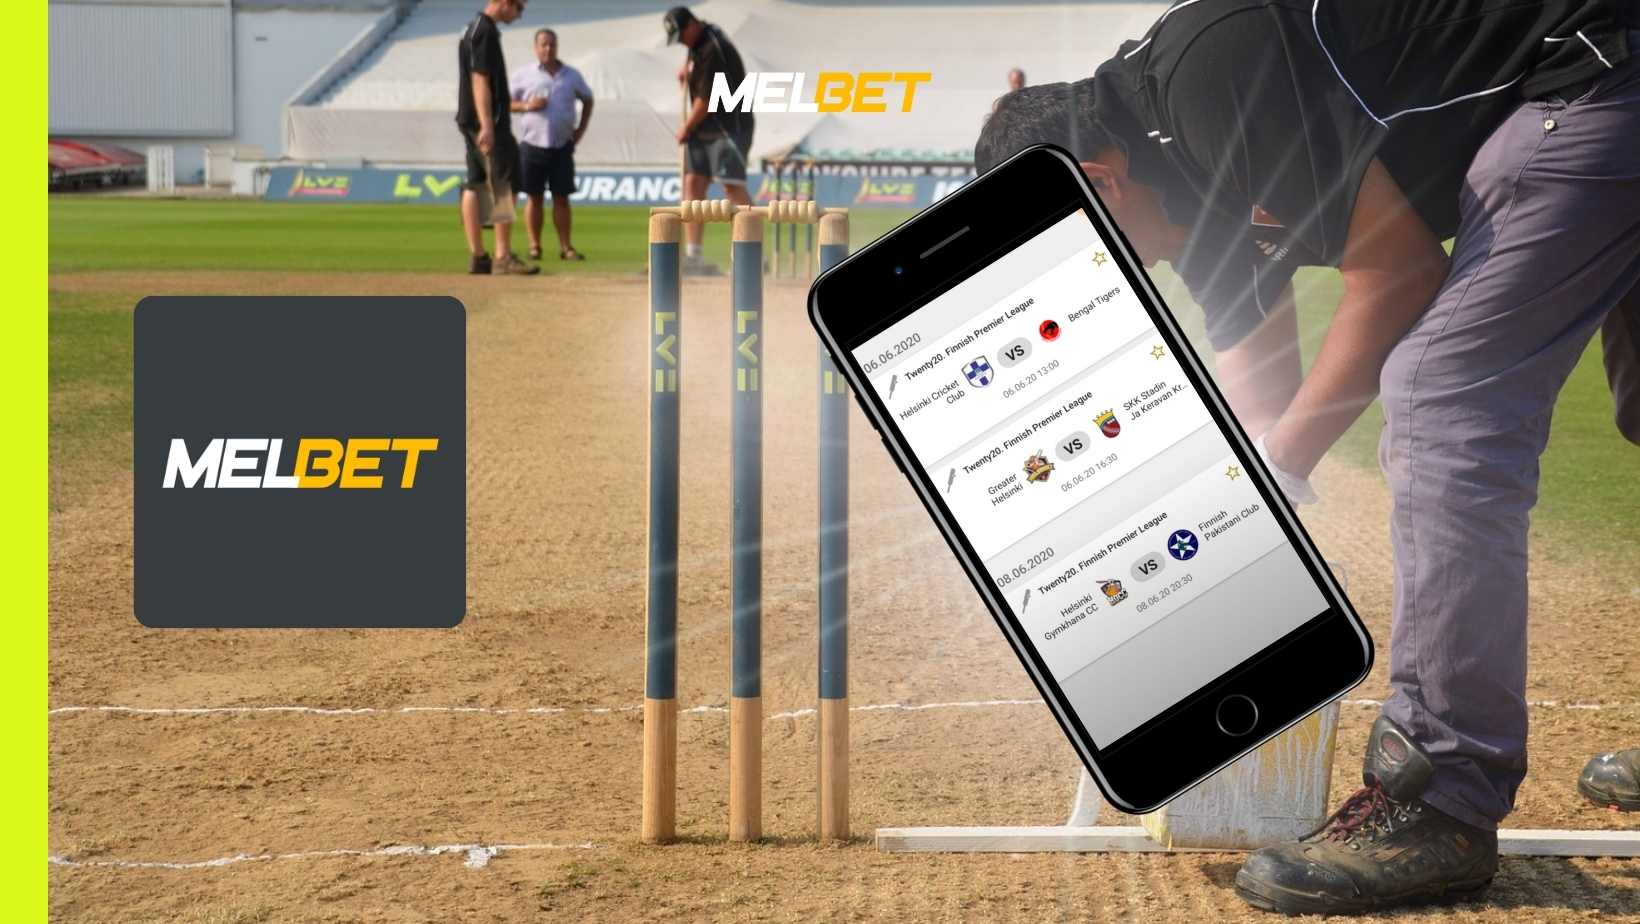 Melbet mobile app for IPL betting